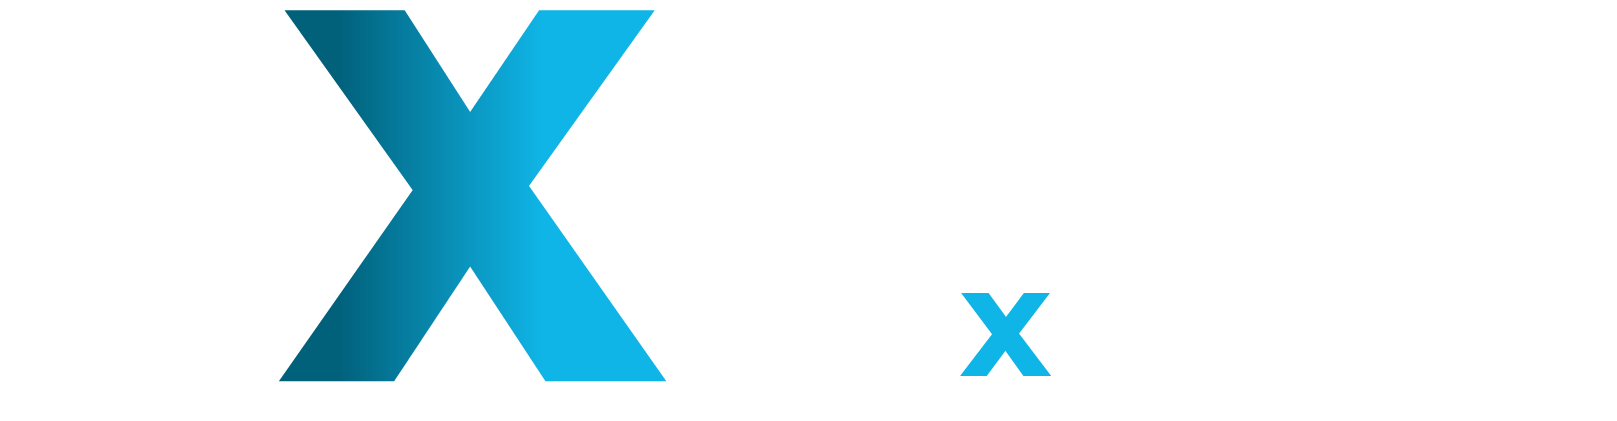 Aesthetic X Digital